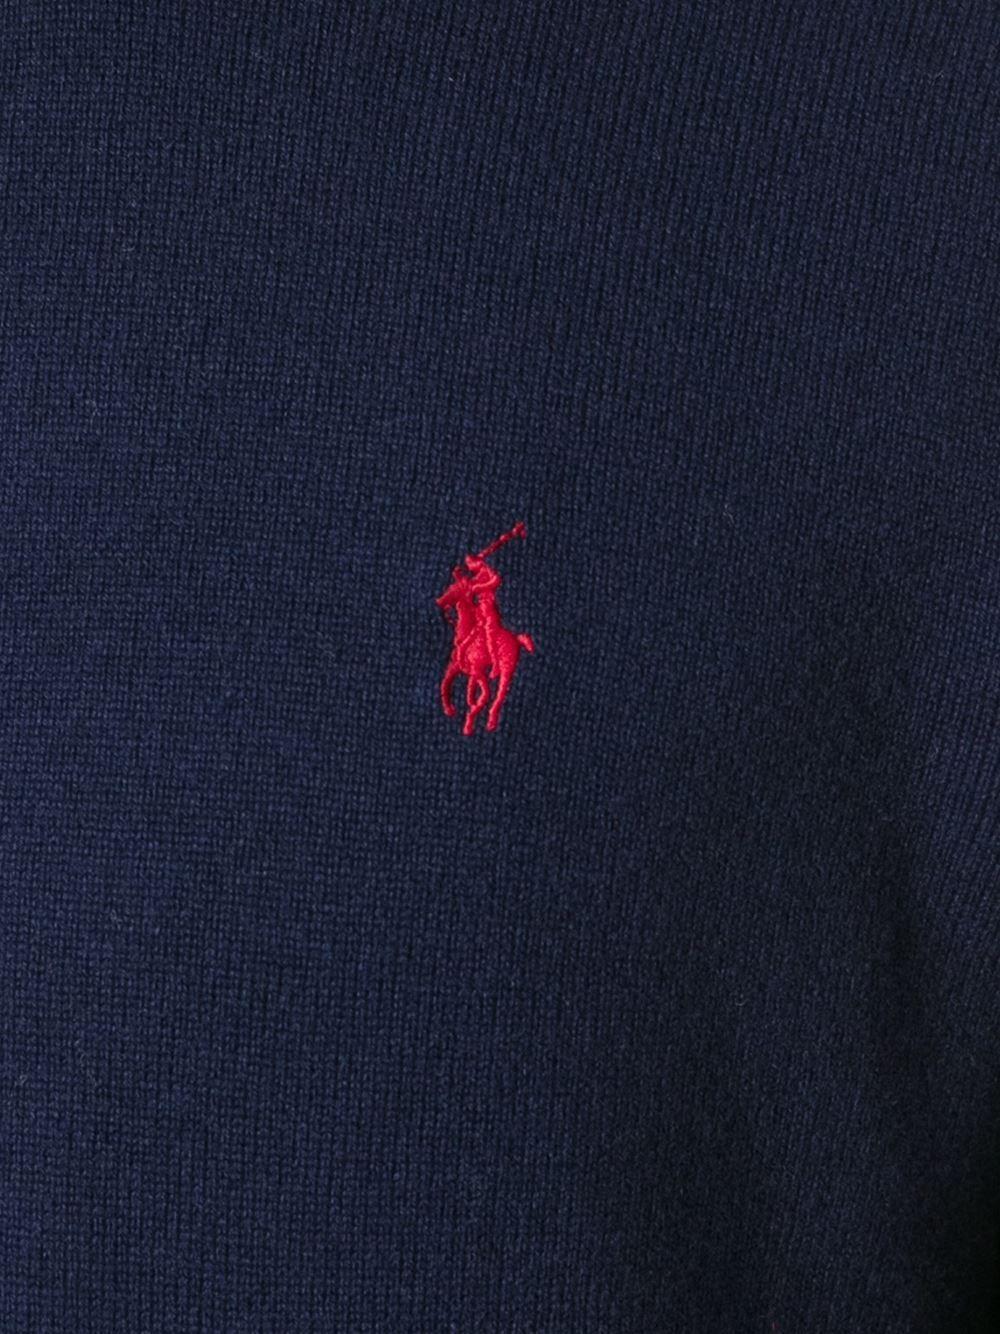 Polo Ralph Lauren Blue Logo Sweater Product 1 21764704 3 187278205 Normal.jpeg